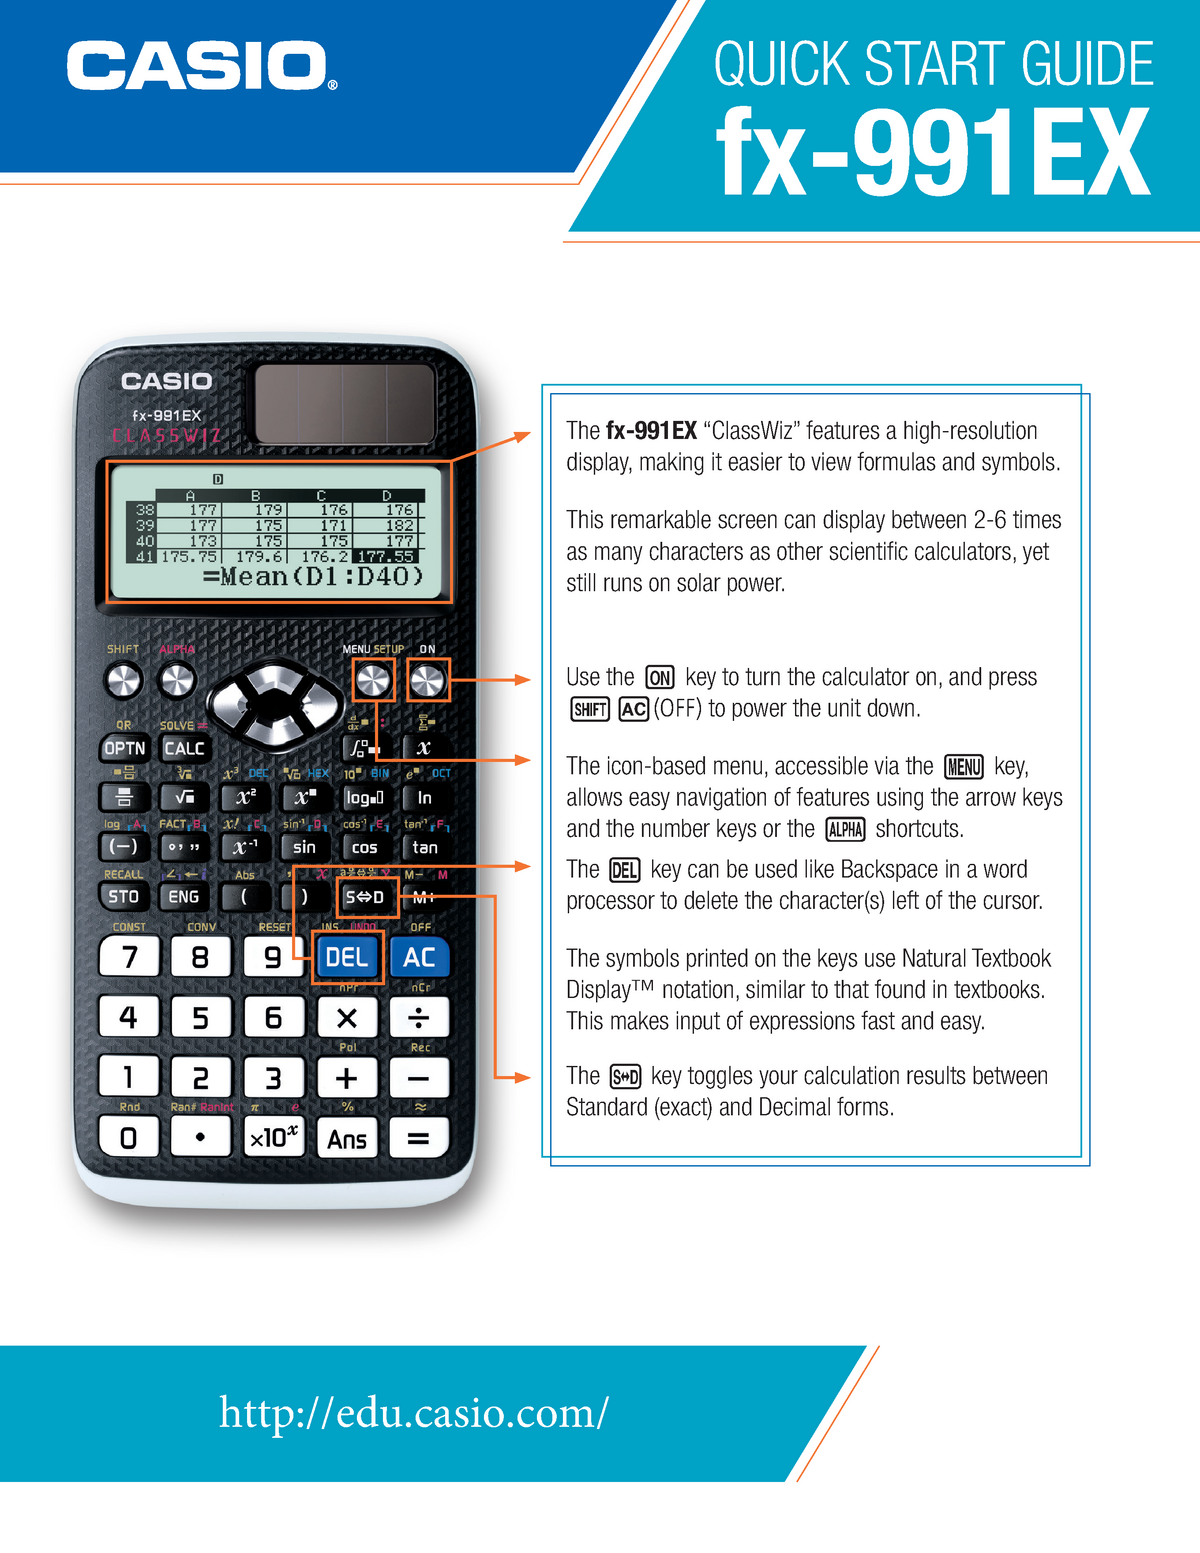 Casio Classwiz Fx 570Ex - Casio Fx-570EX Scientific Calculator - ALL IT Hypermarket : Lượt xem 149 n4 năm trước.